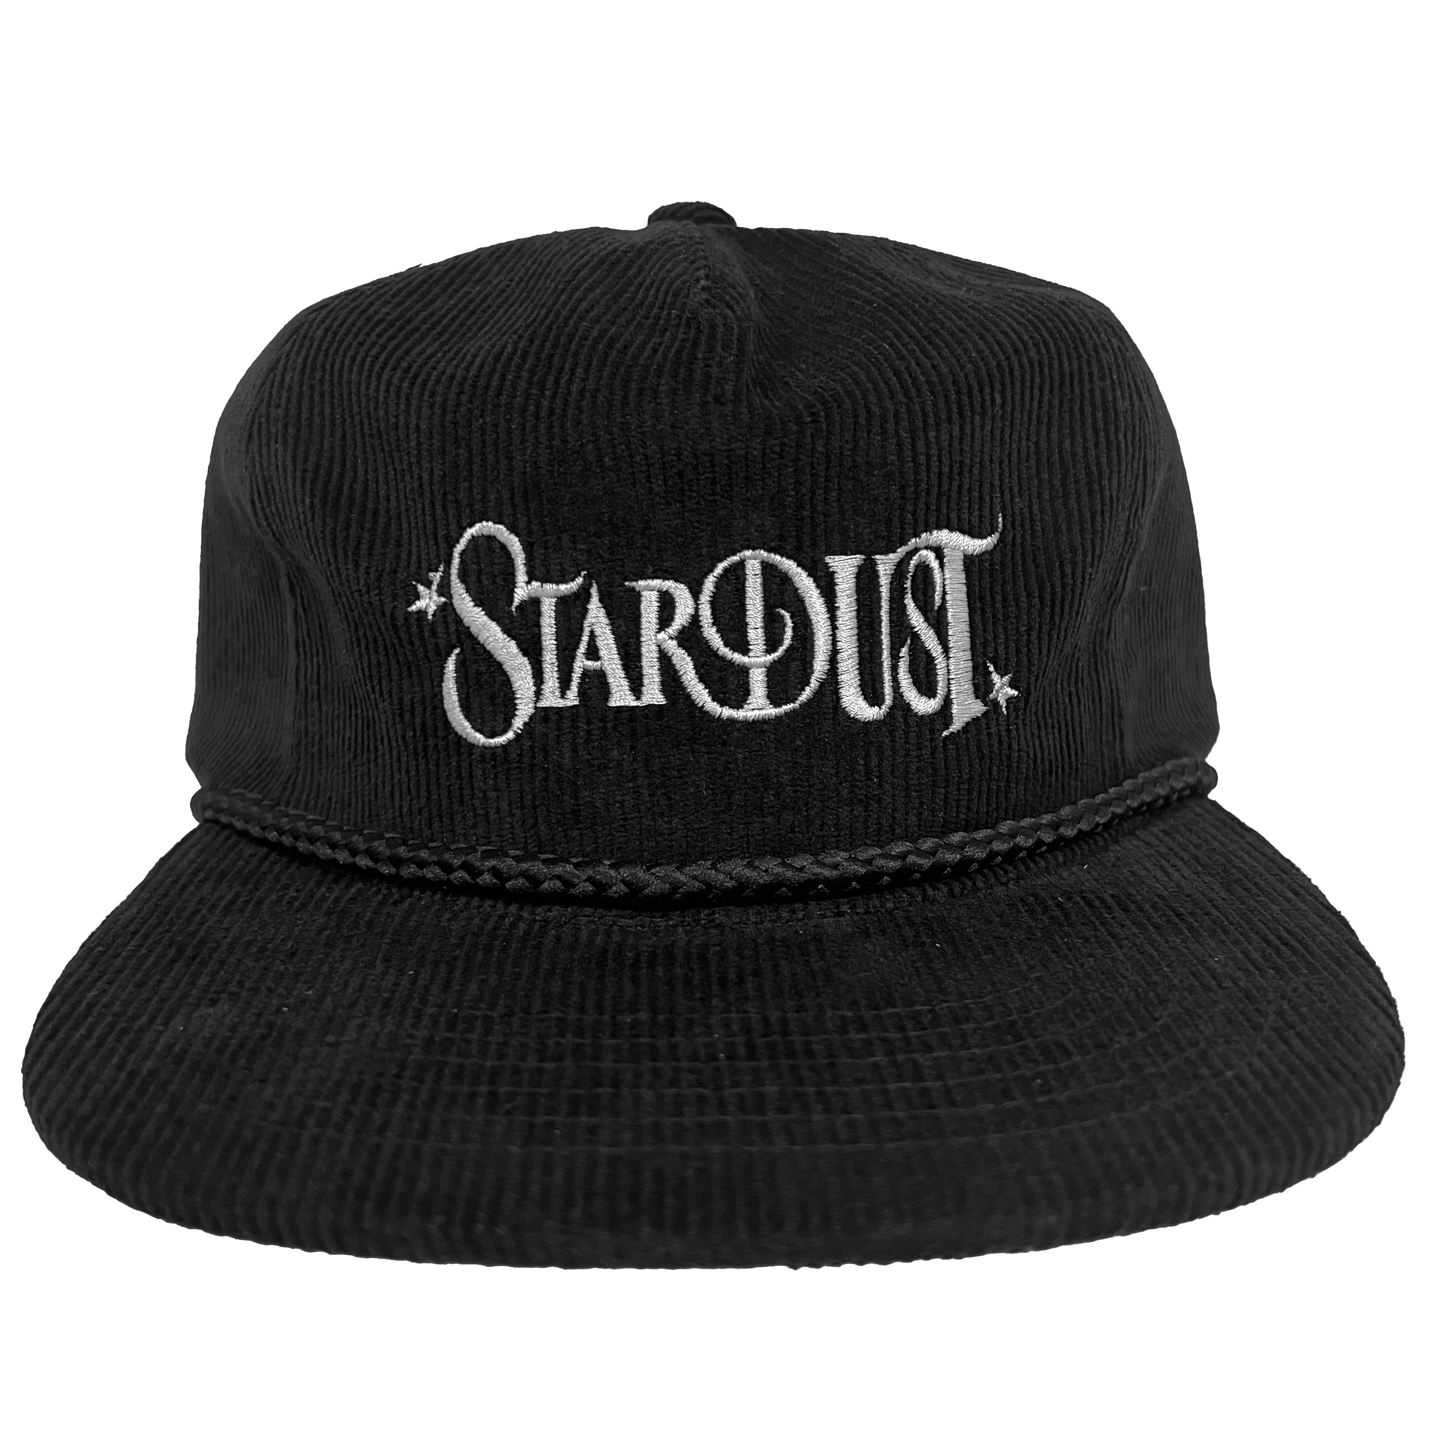 Stardust Wanderlust II Corduroy Snapback Hat 004 Black / White